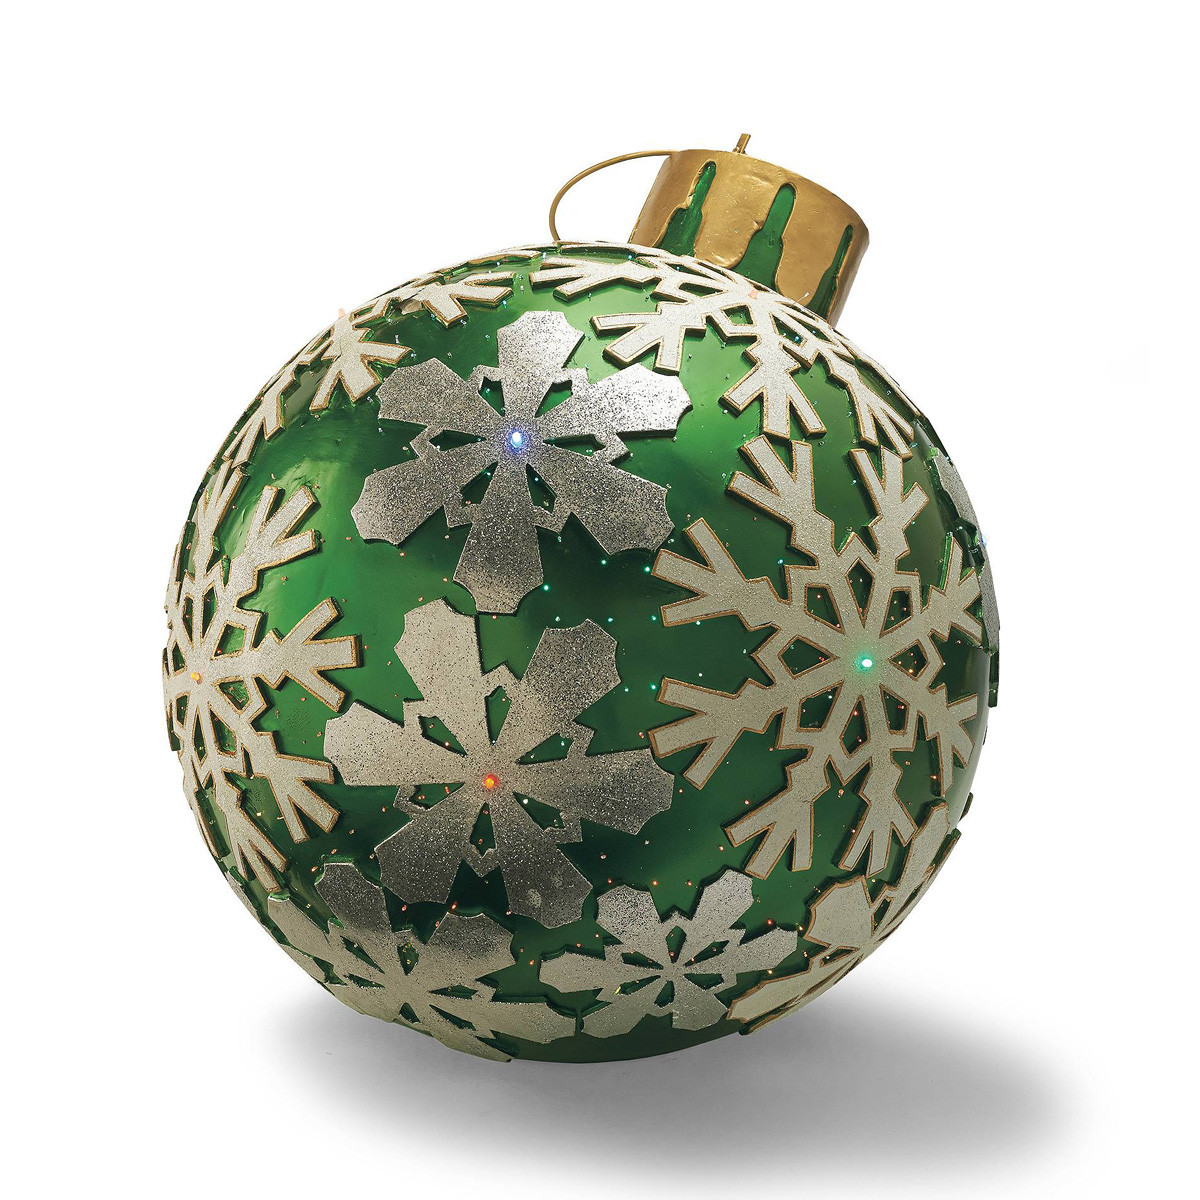 Outdoor Christmas Balls
 Massive Fiber Optic LED Outdoor Christmas Ornaments The